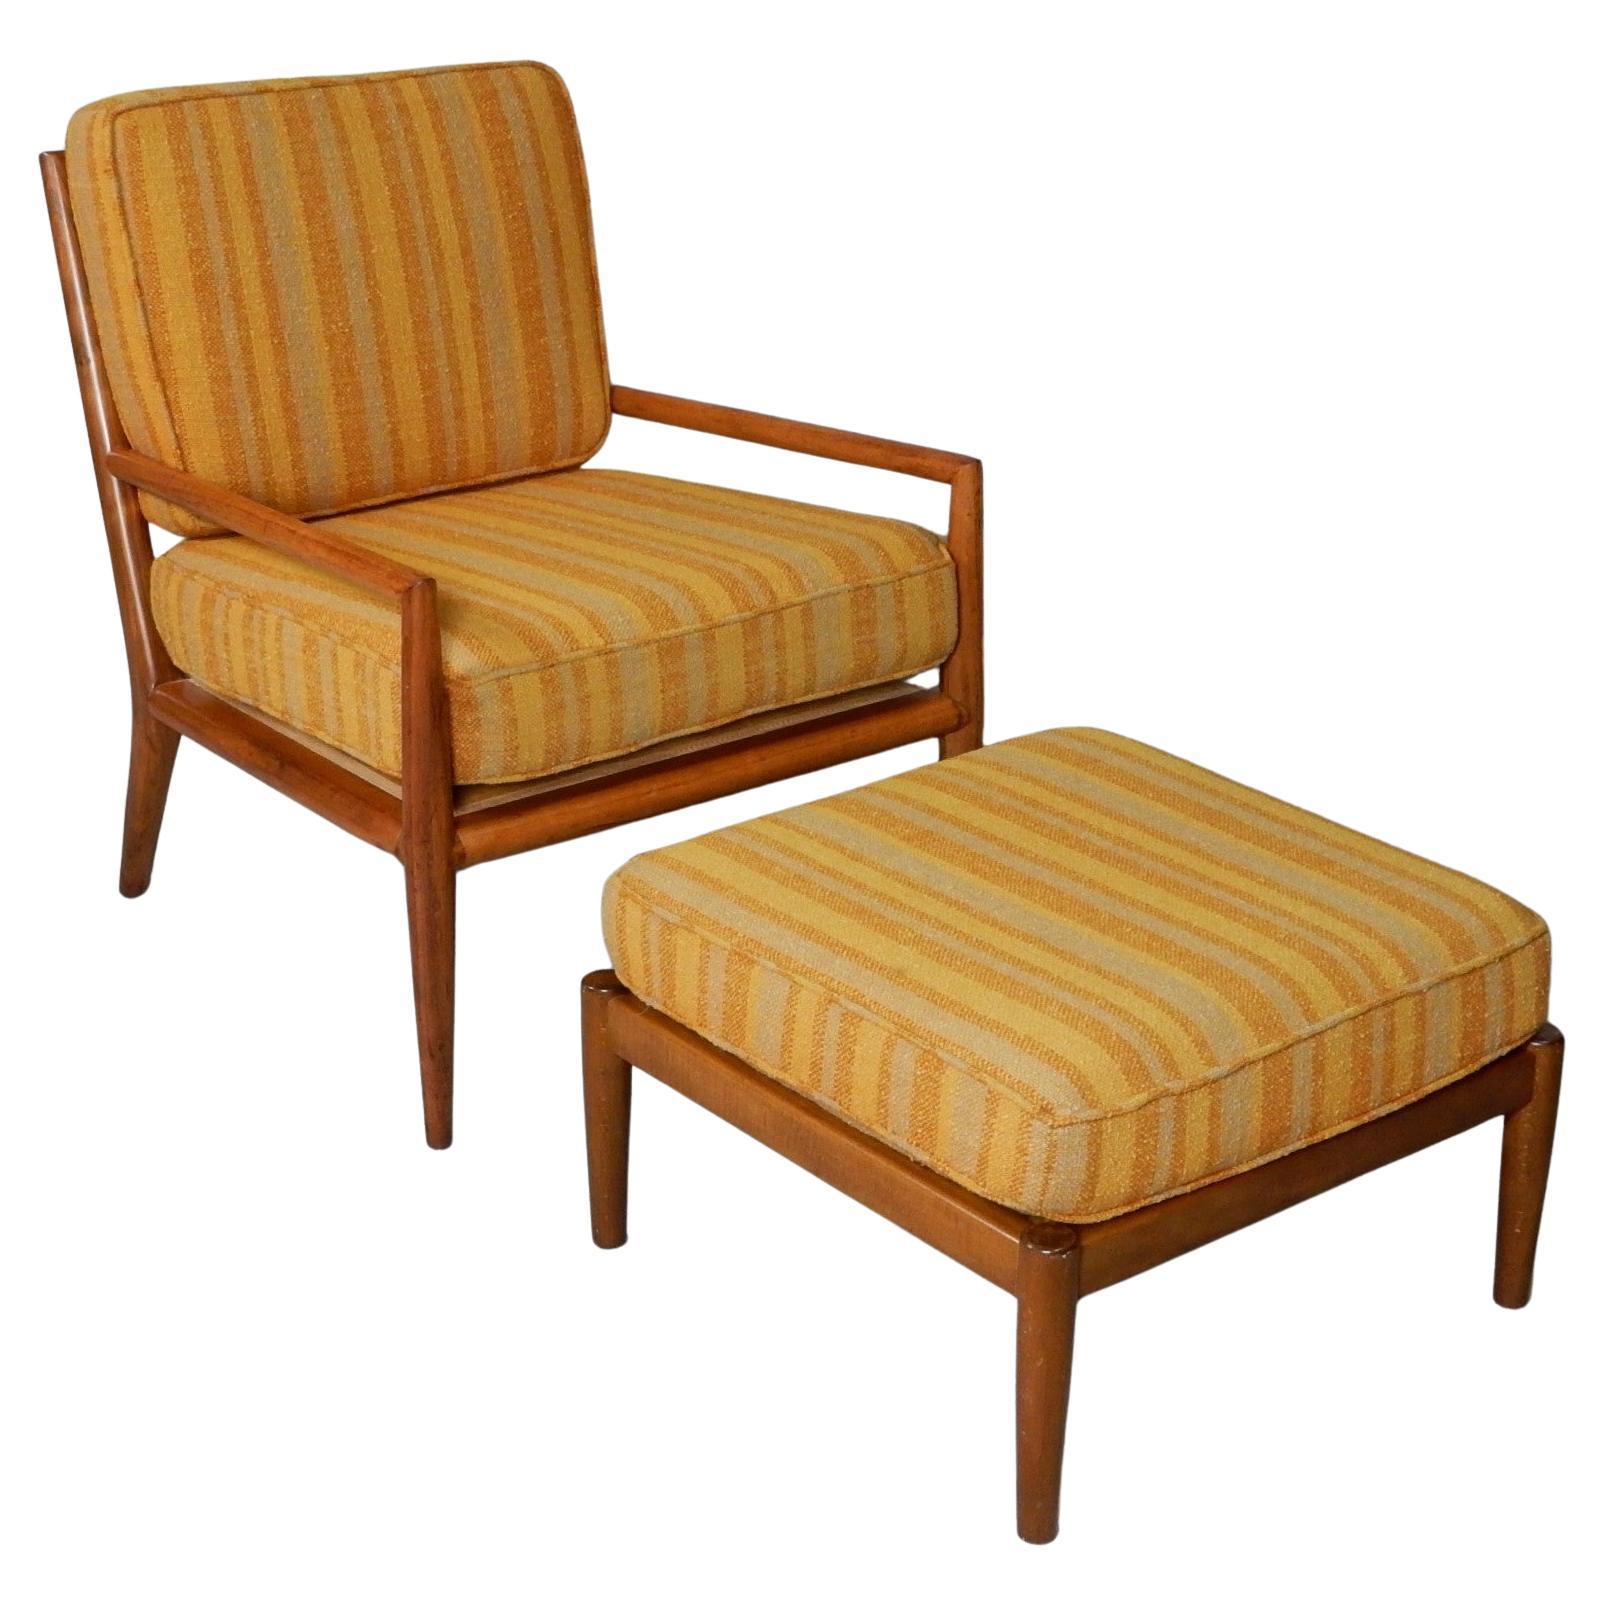 T.H. Robsjohn-Gibbings Lounge Chair & Ottoman by Widdicomb 1950's